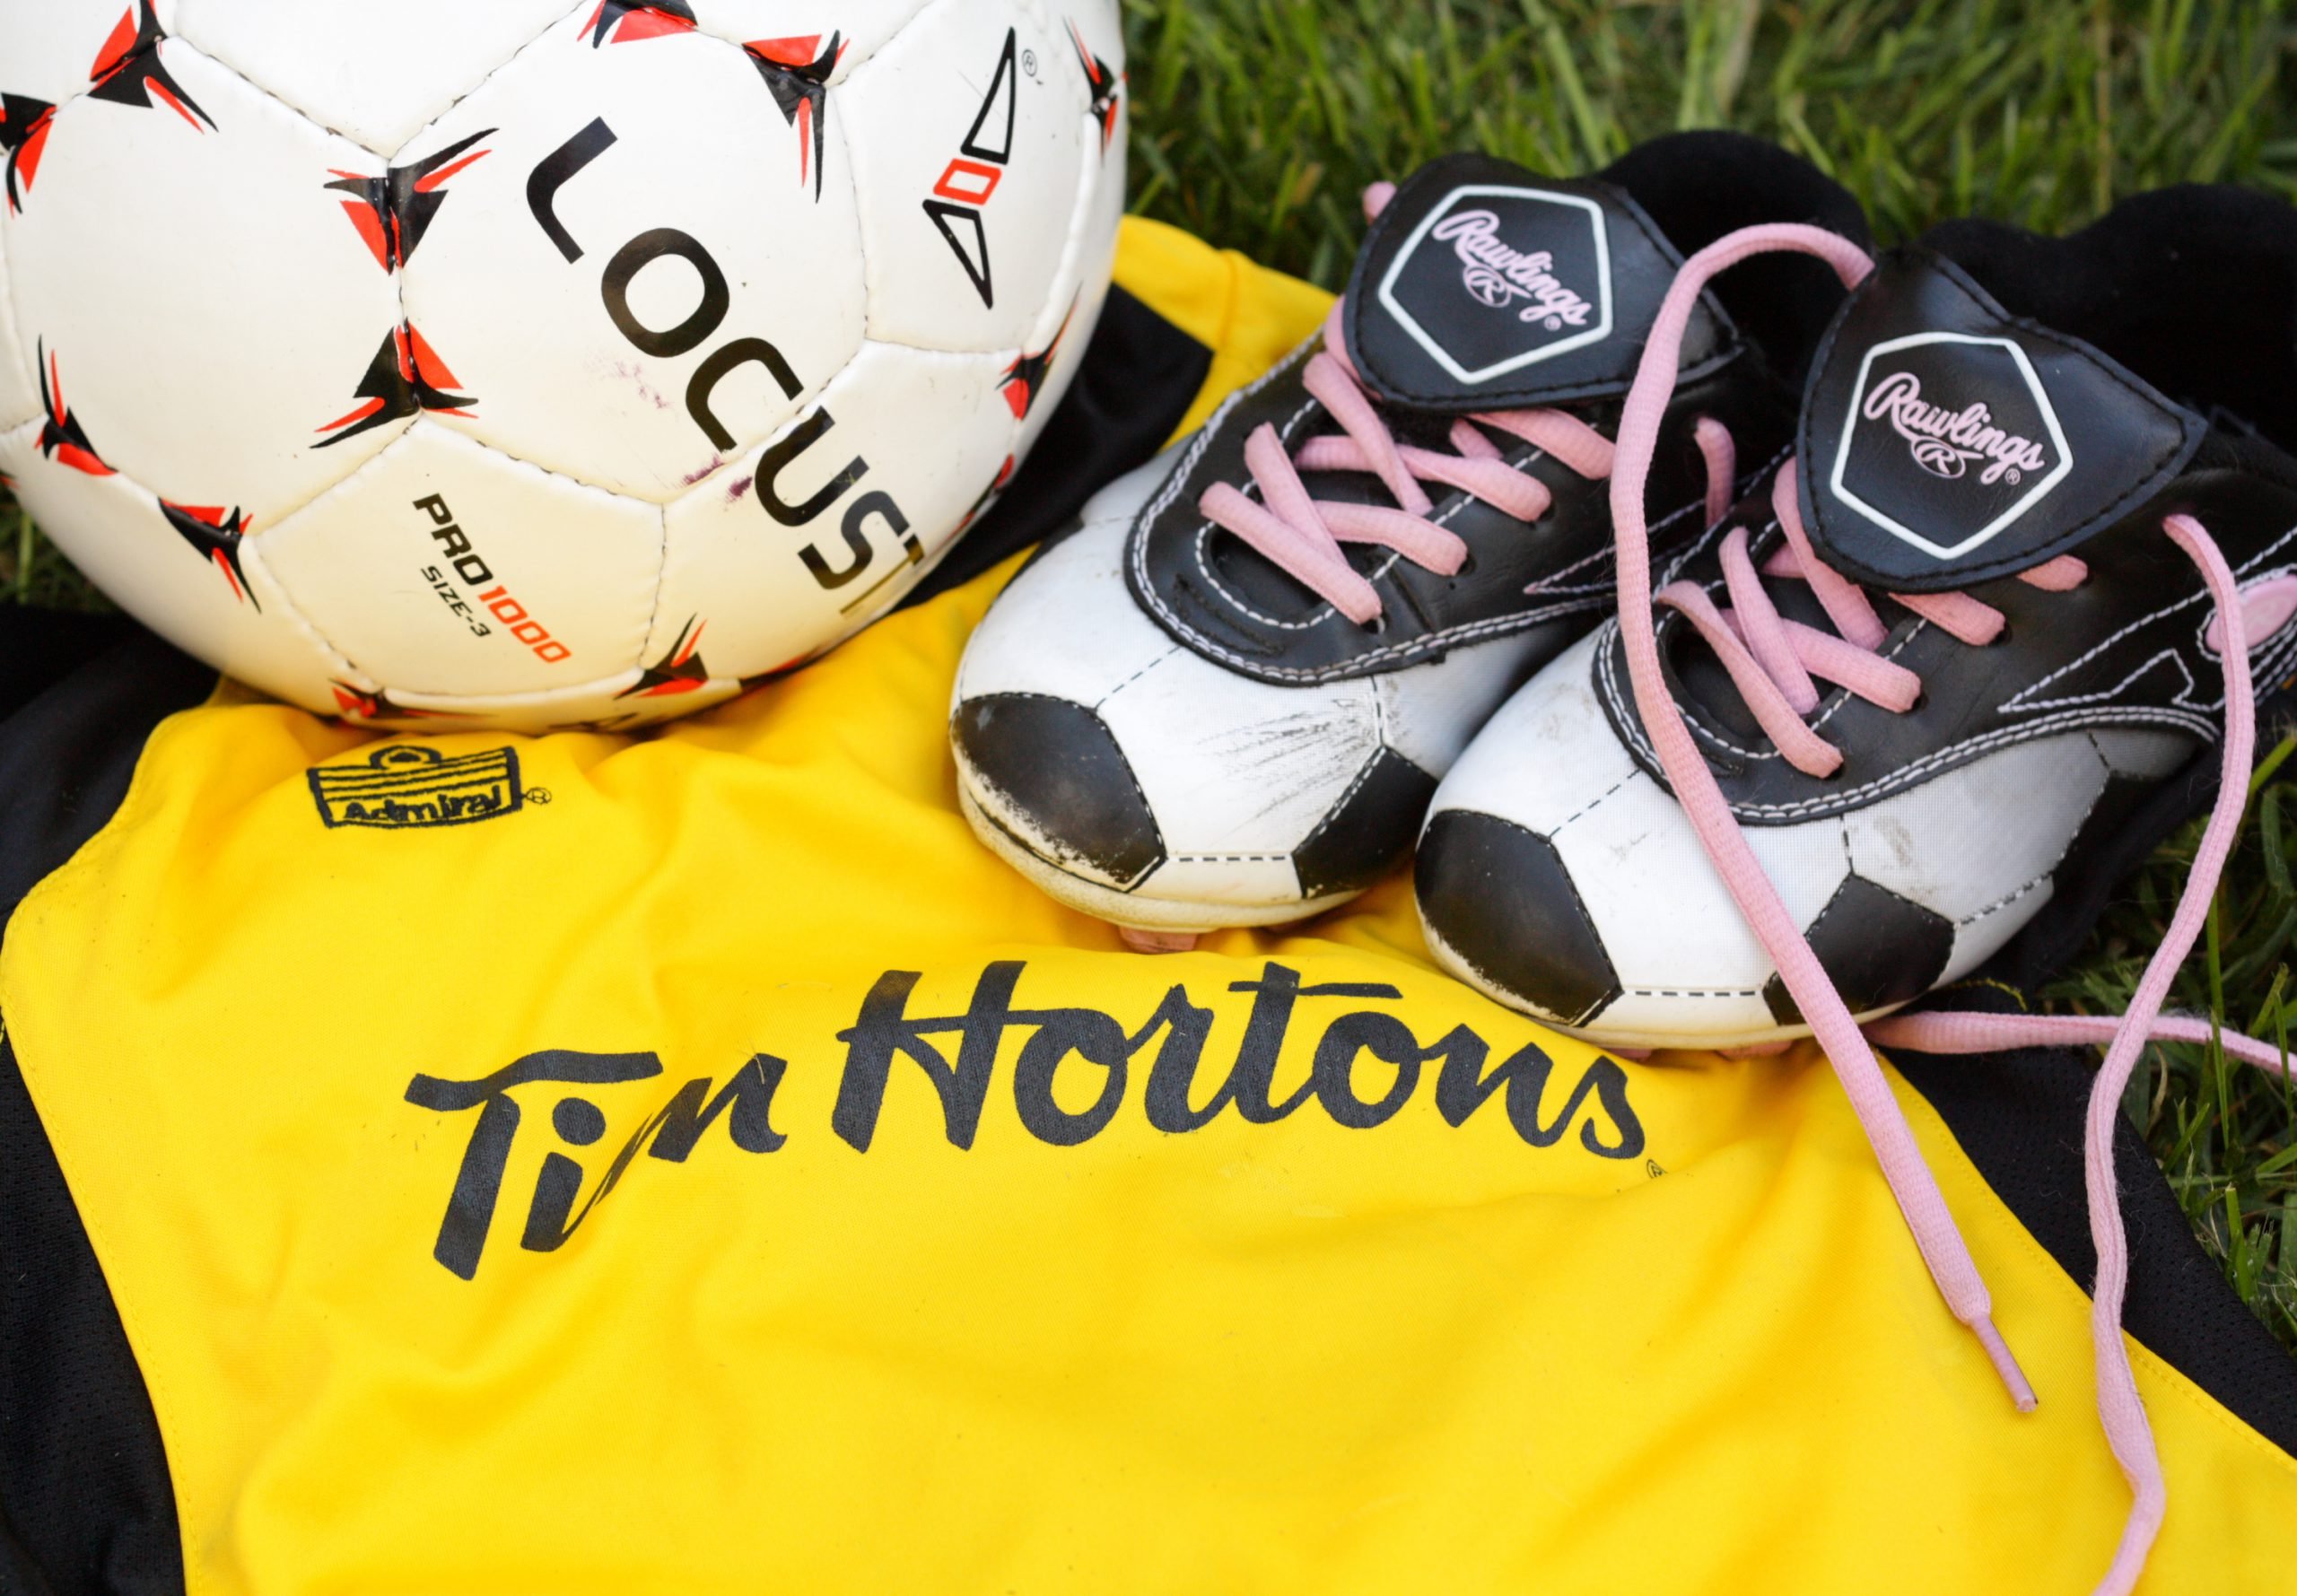 Fußball Trikot mit Sponsor Logo|Aston Villa Trikot für Kinder|Wolverhampton Wanderers Trikots mit W88 Sponsoring